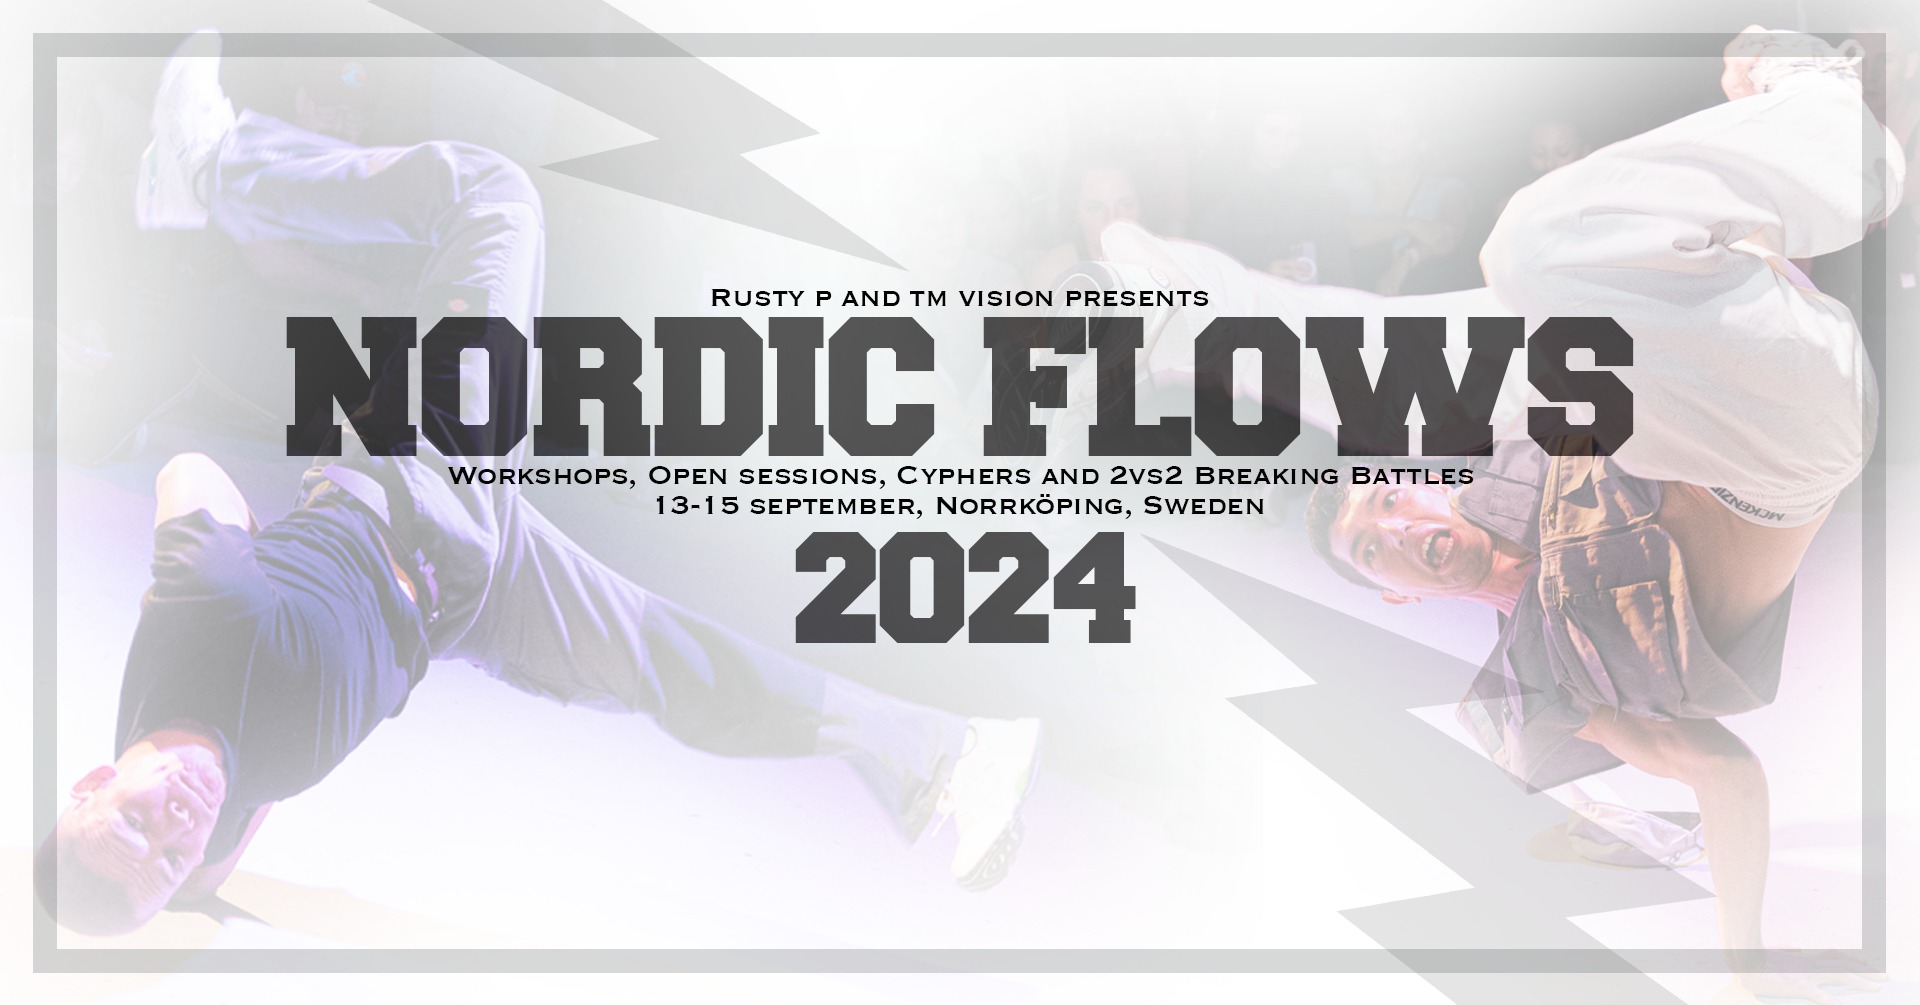 Nordic flows 2024